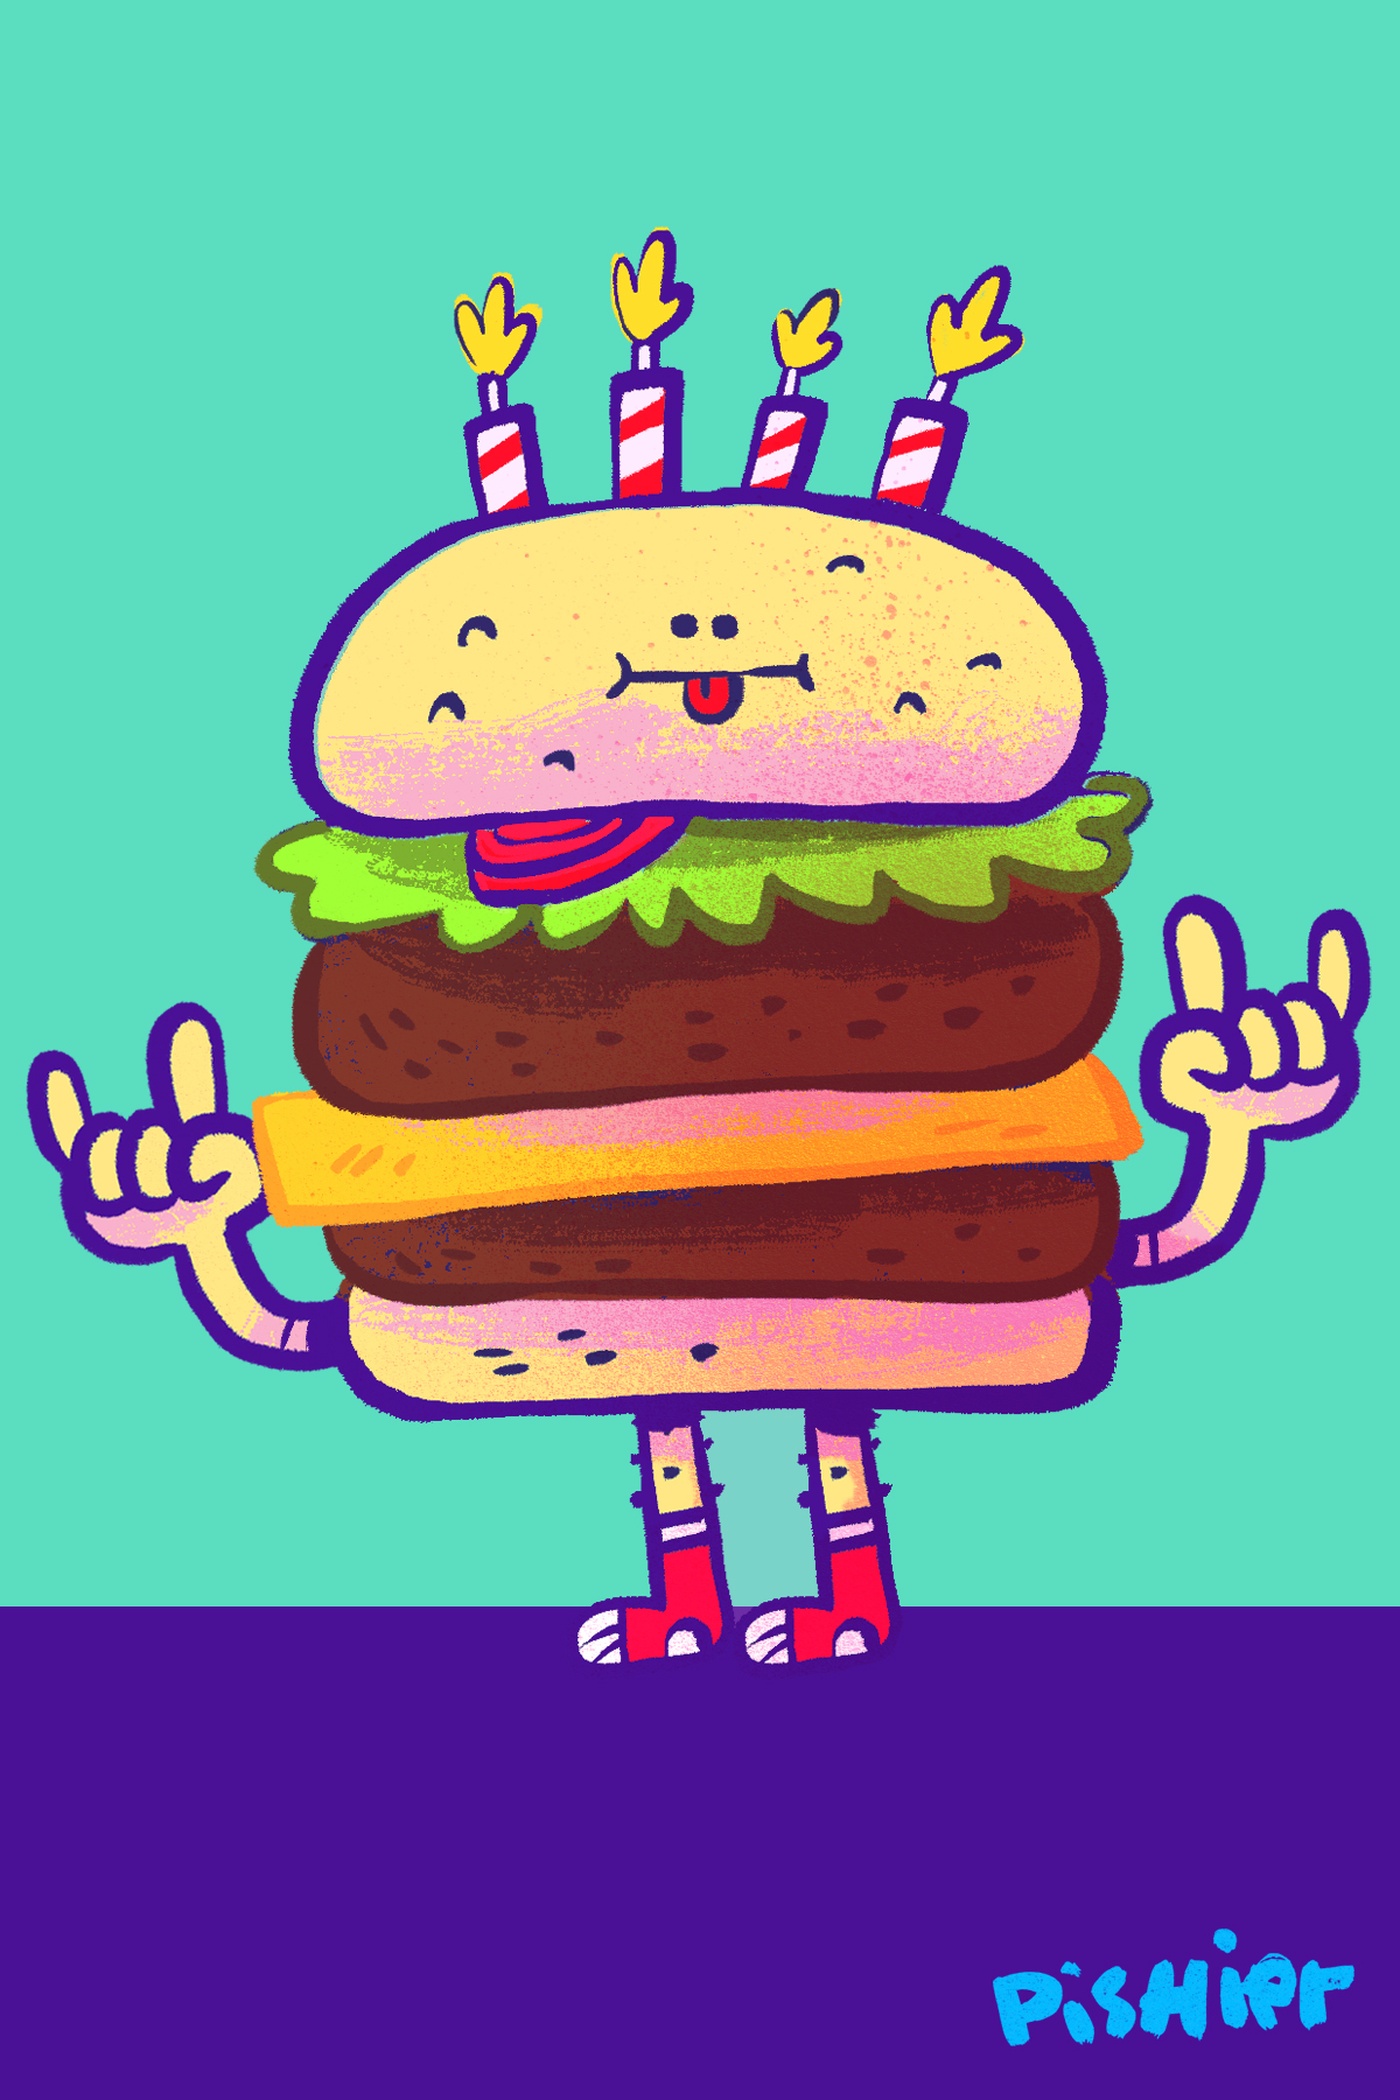 PisHier - Mr Burger